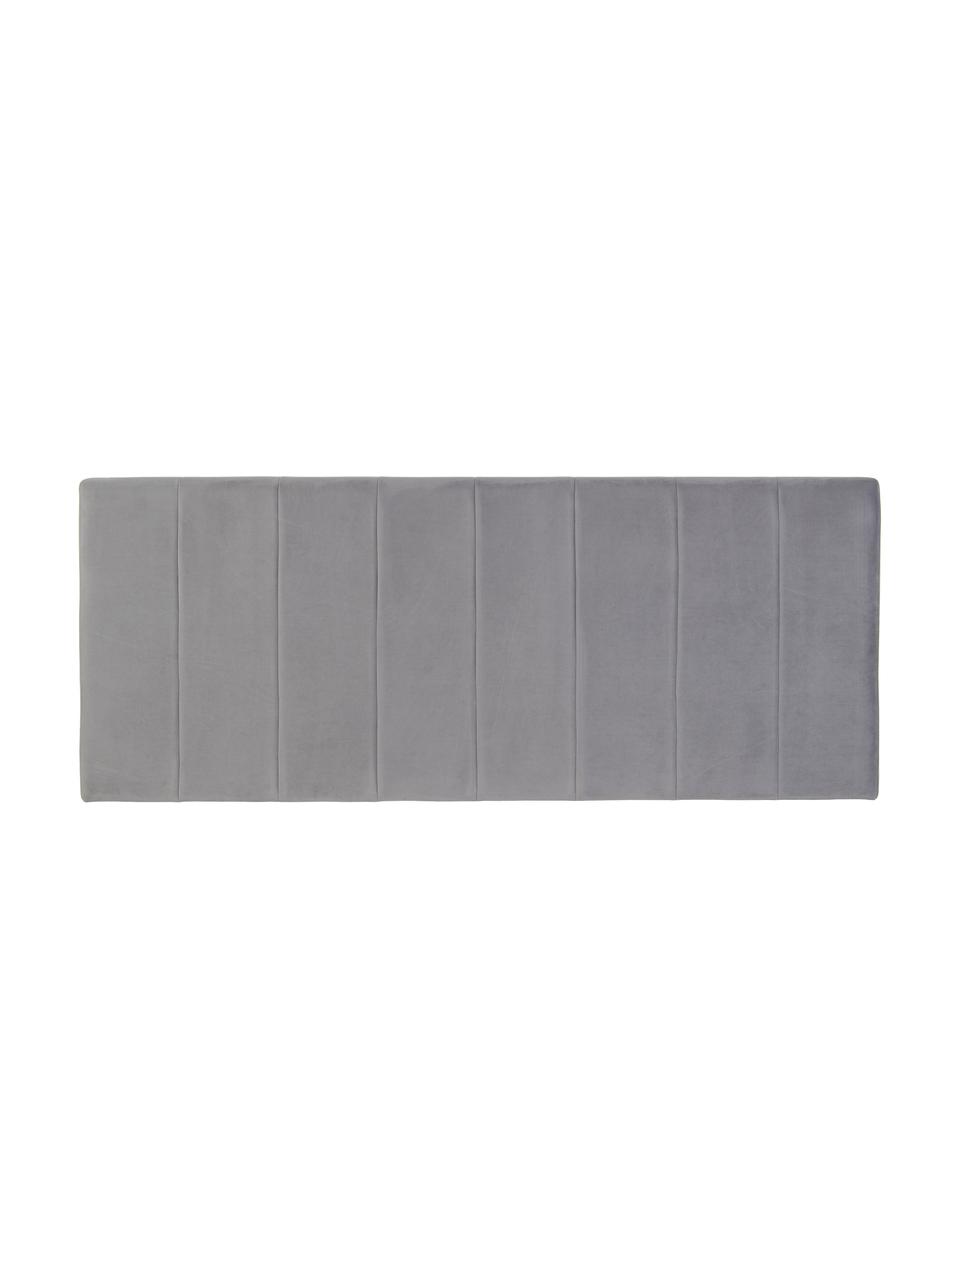 Gepolstertes Samt-Kopfteil Adrio in Grau, Bezug: 100% Polyestersamt, Gestell: Holz, Metall, Samt Grau, B 160 x H 64 cm